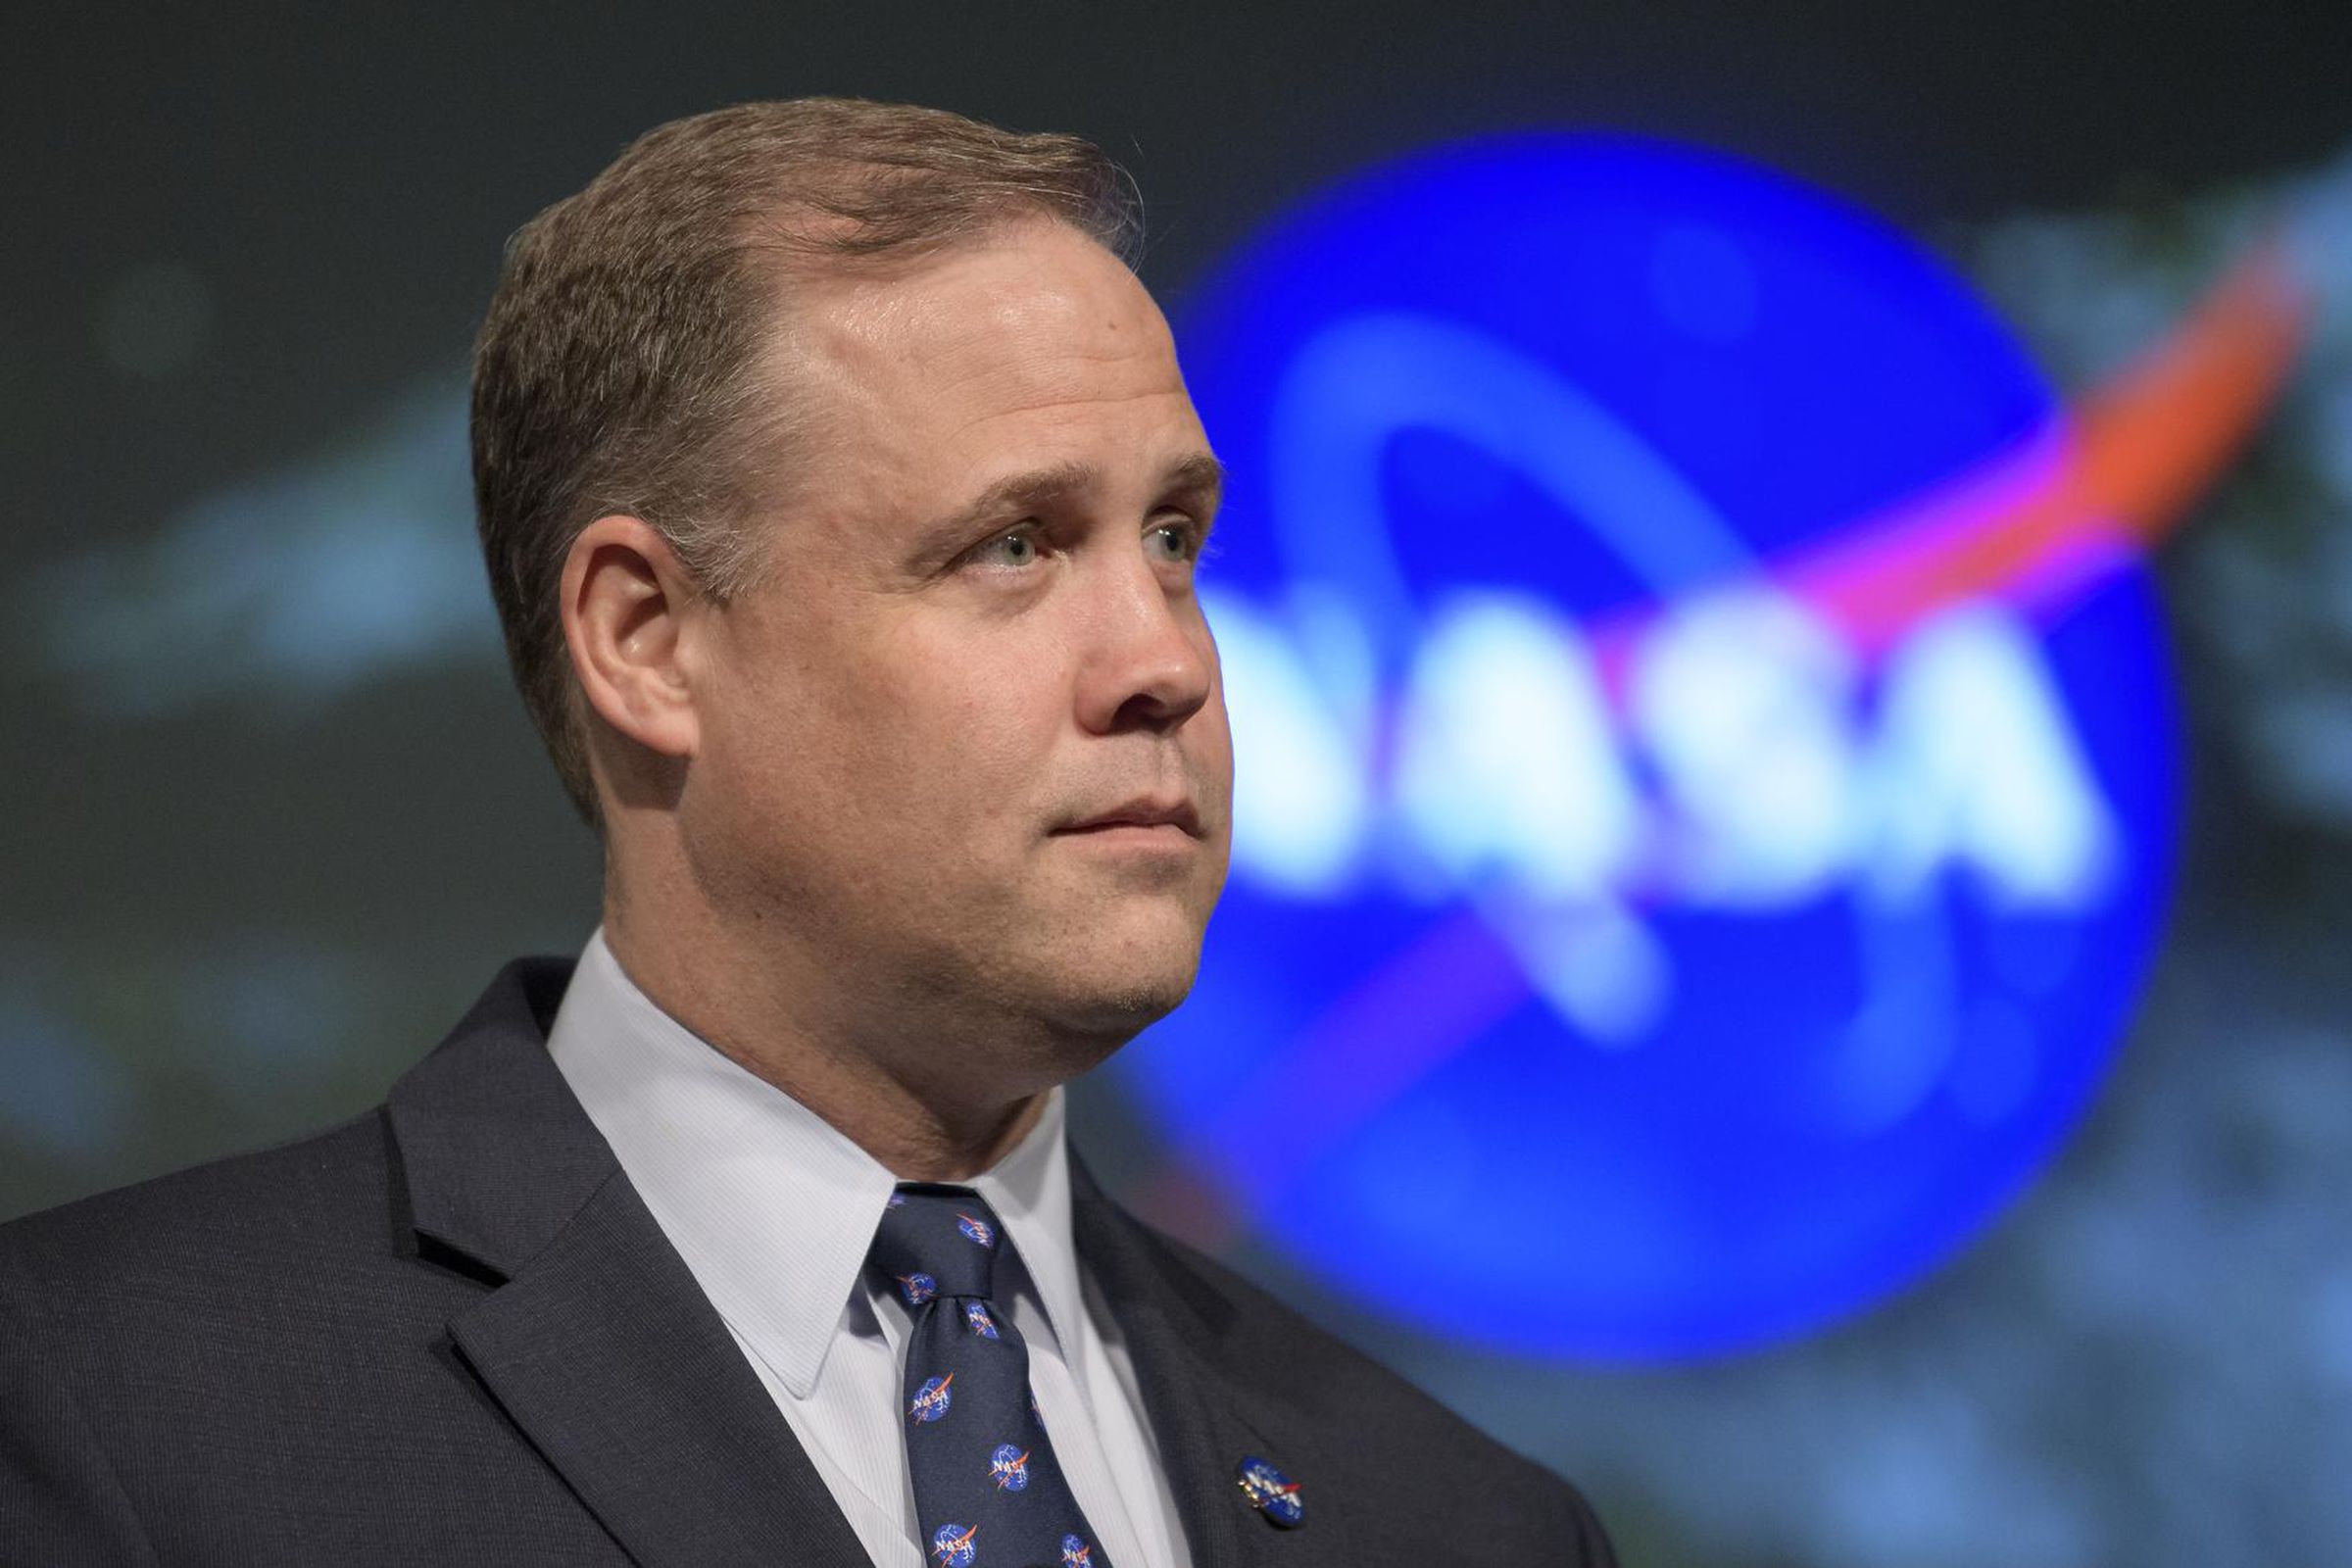 NASA administrator Jim Bridenstine